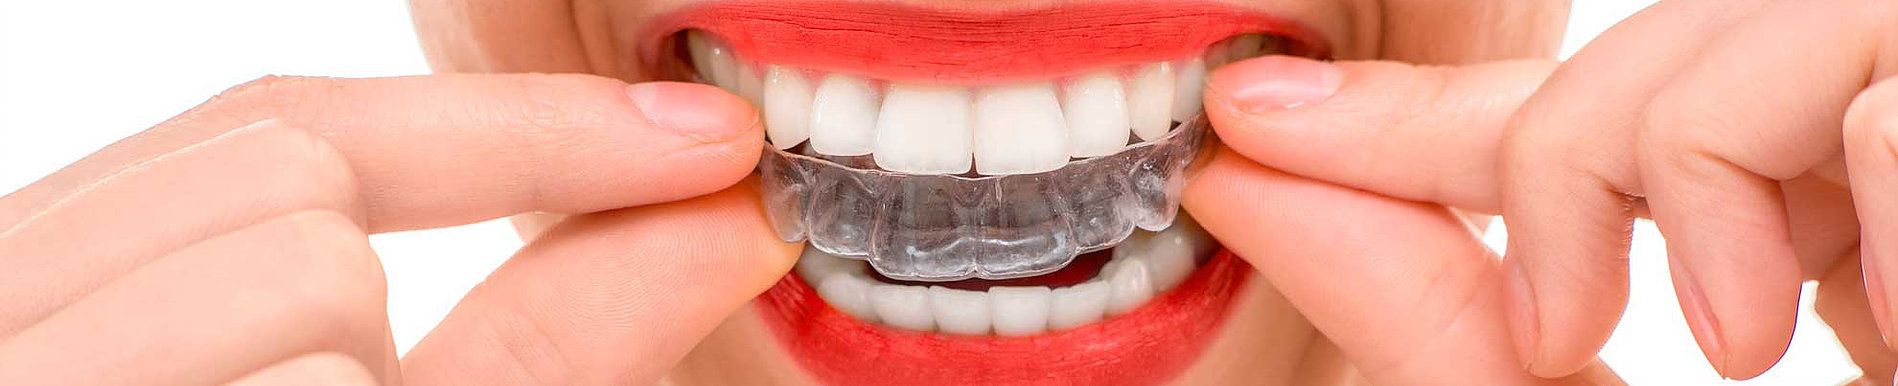 tratamientos dentales clinica dental caparroso macrident navarra